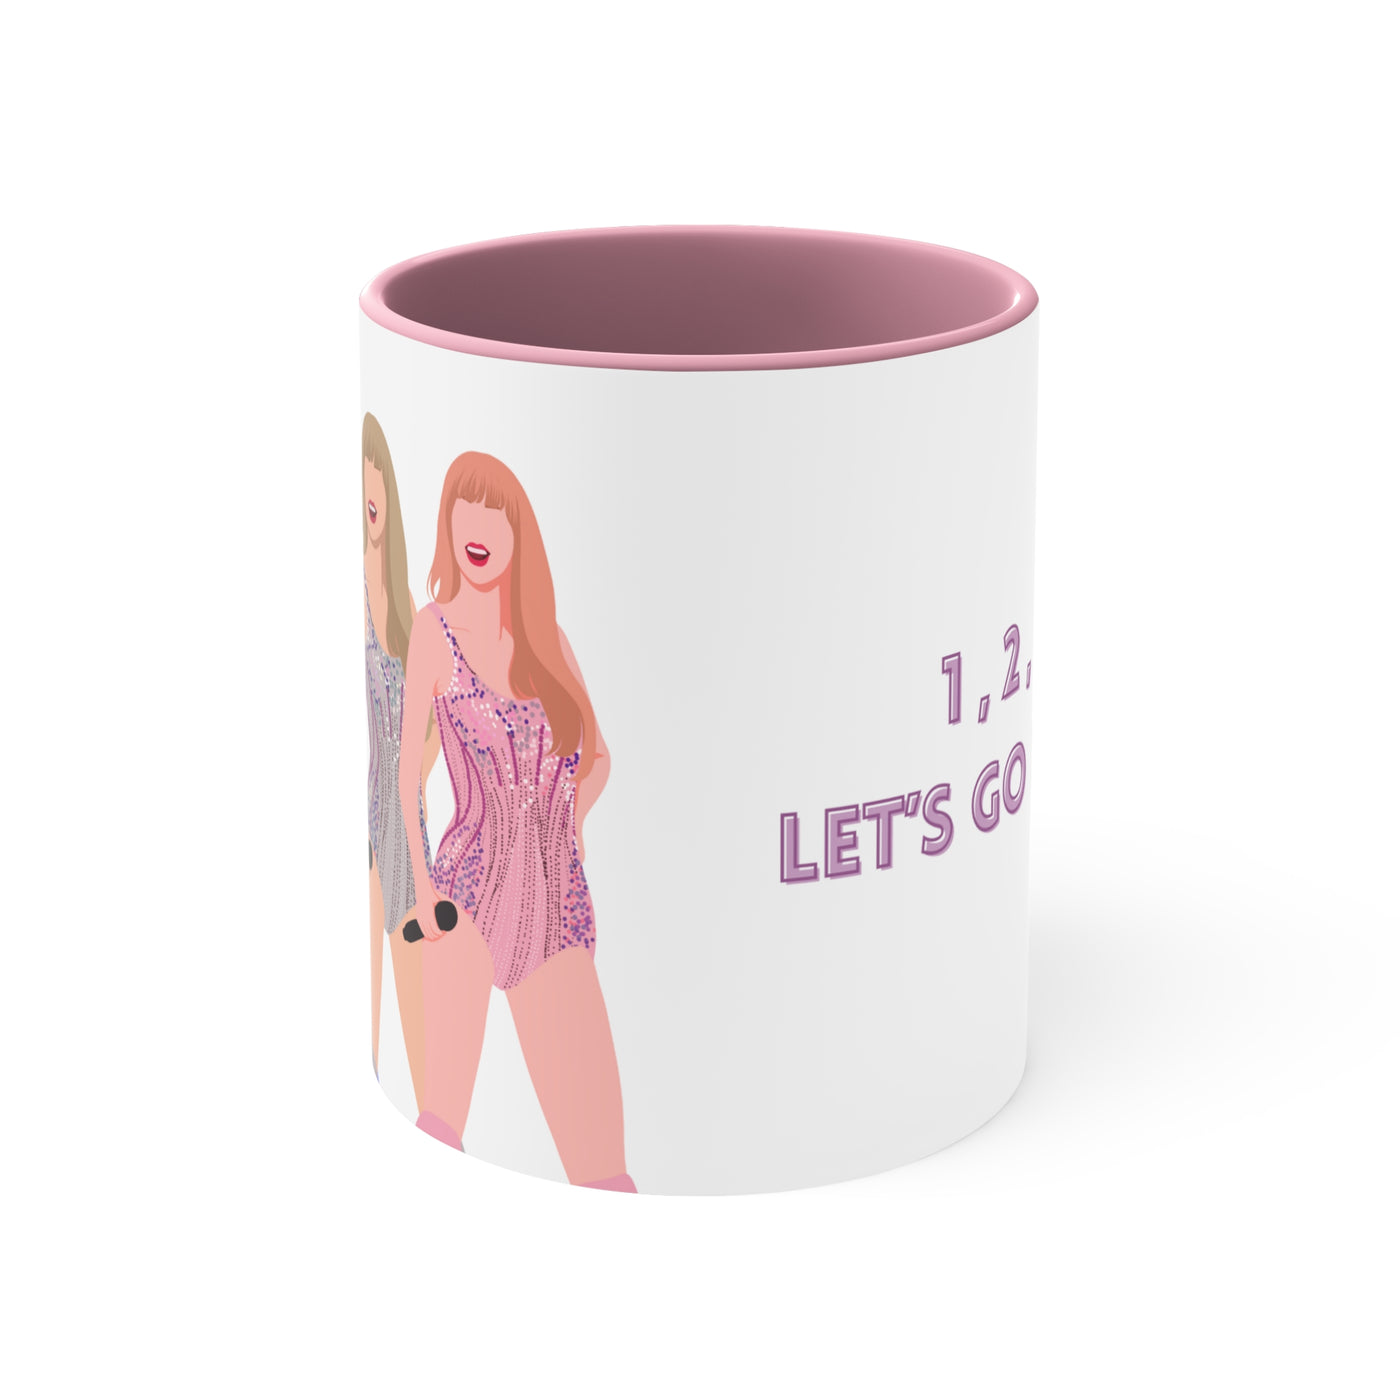 The Taylor - Let's Go Mug